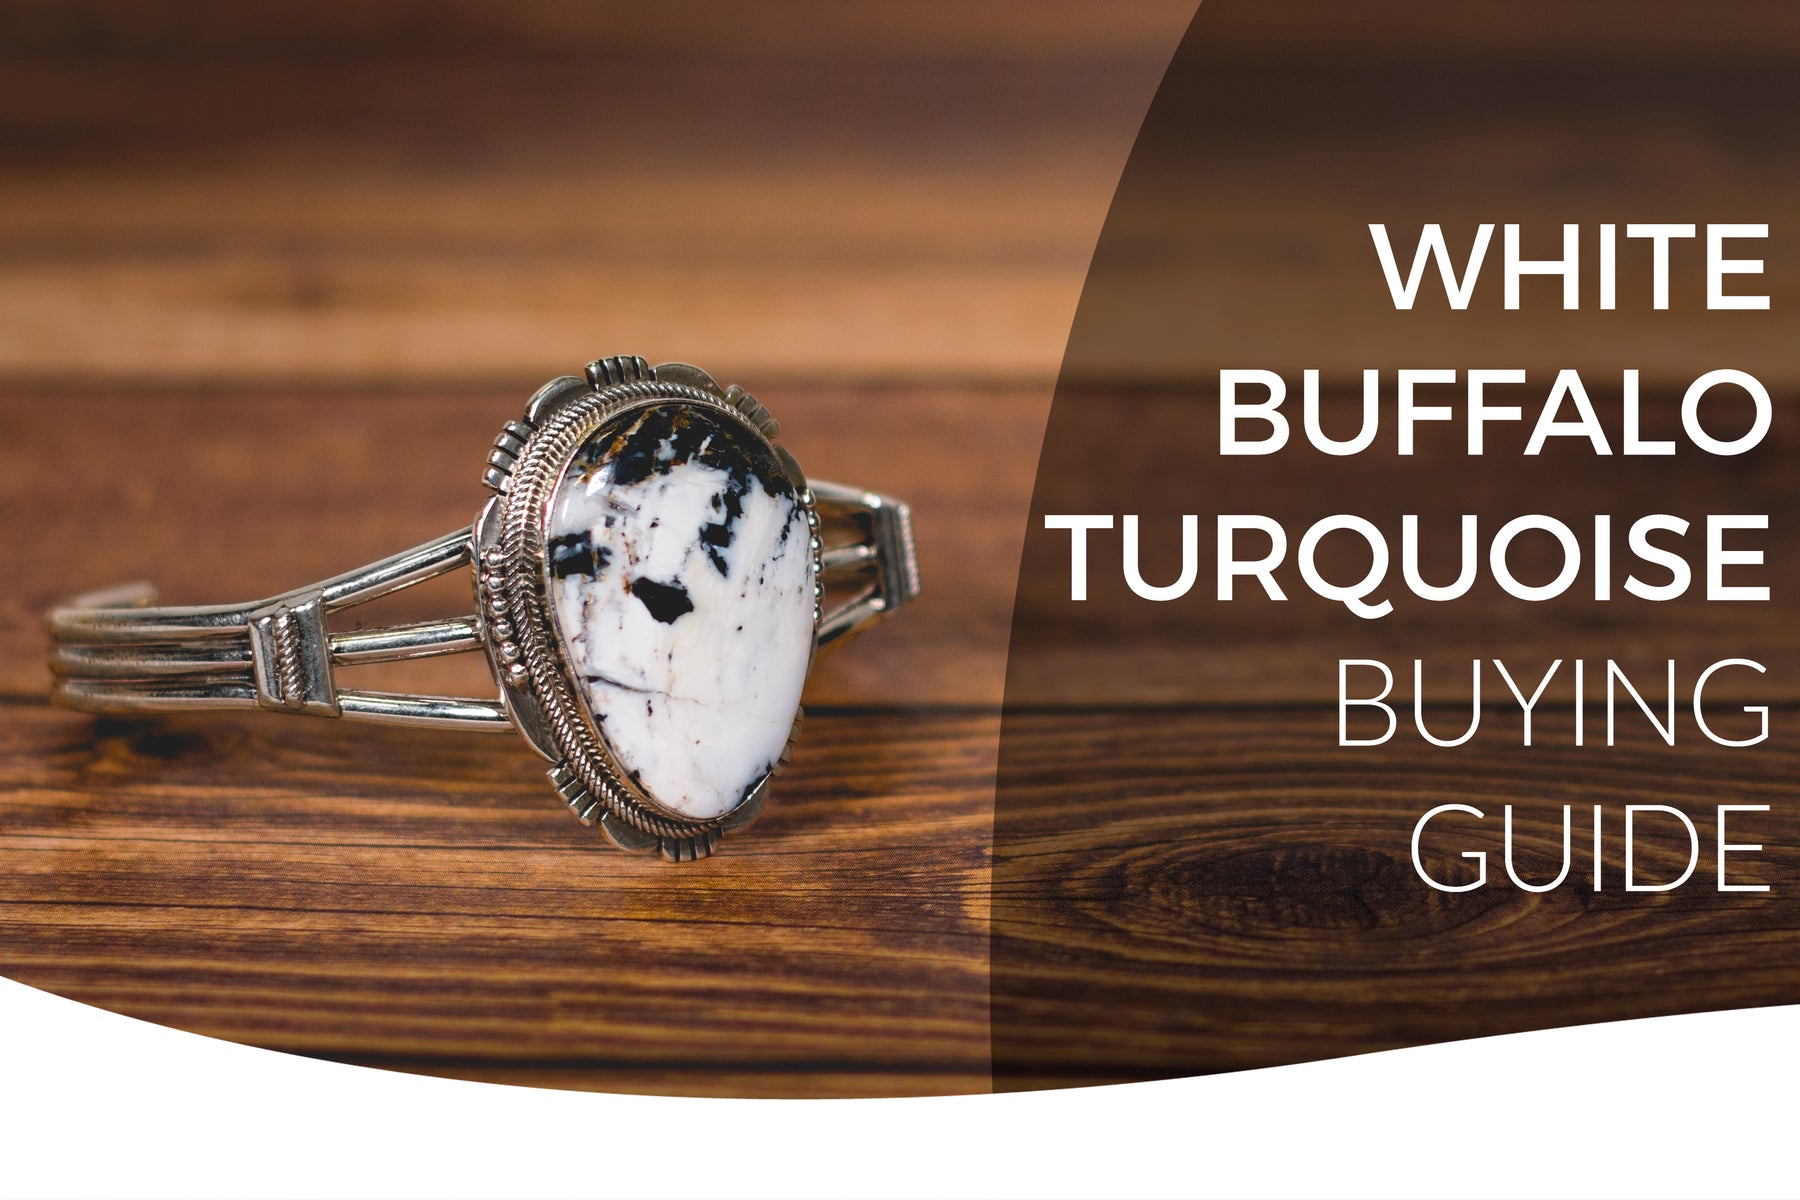 White Buffalo Turquoise Buying Guide